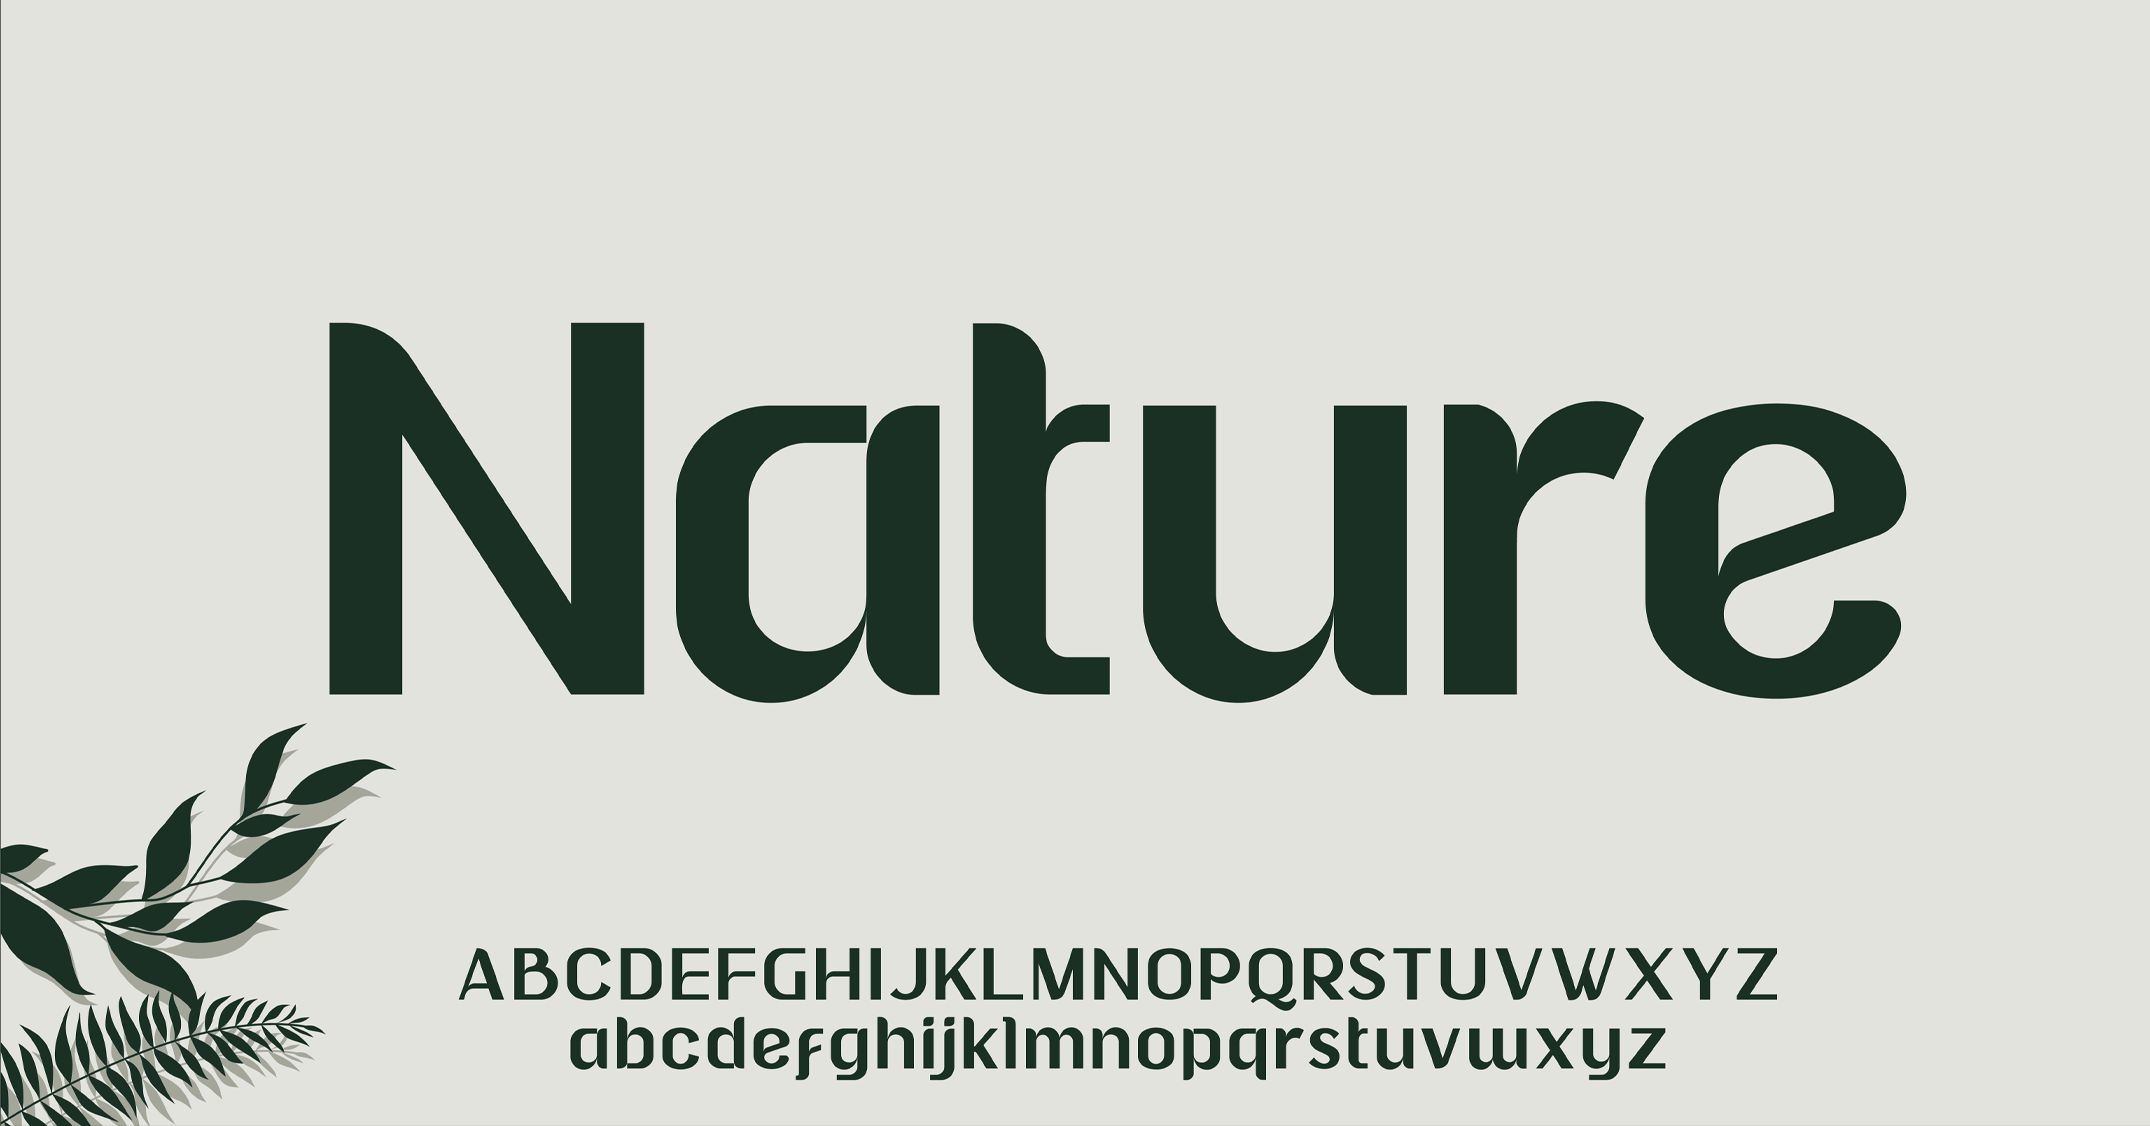 دانلود فونت انگلیسی Nature Font